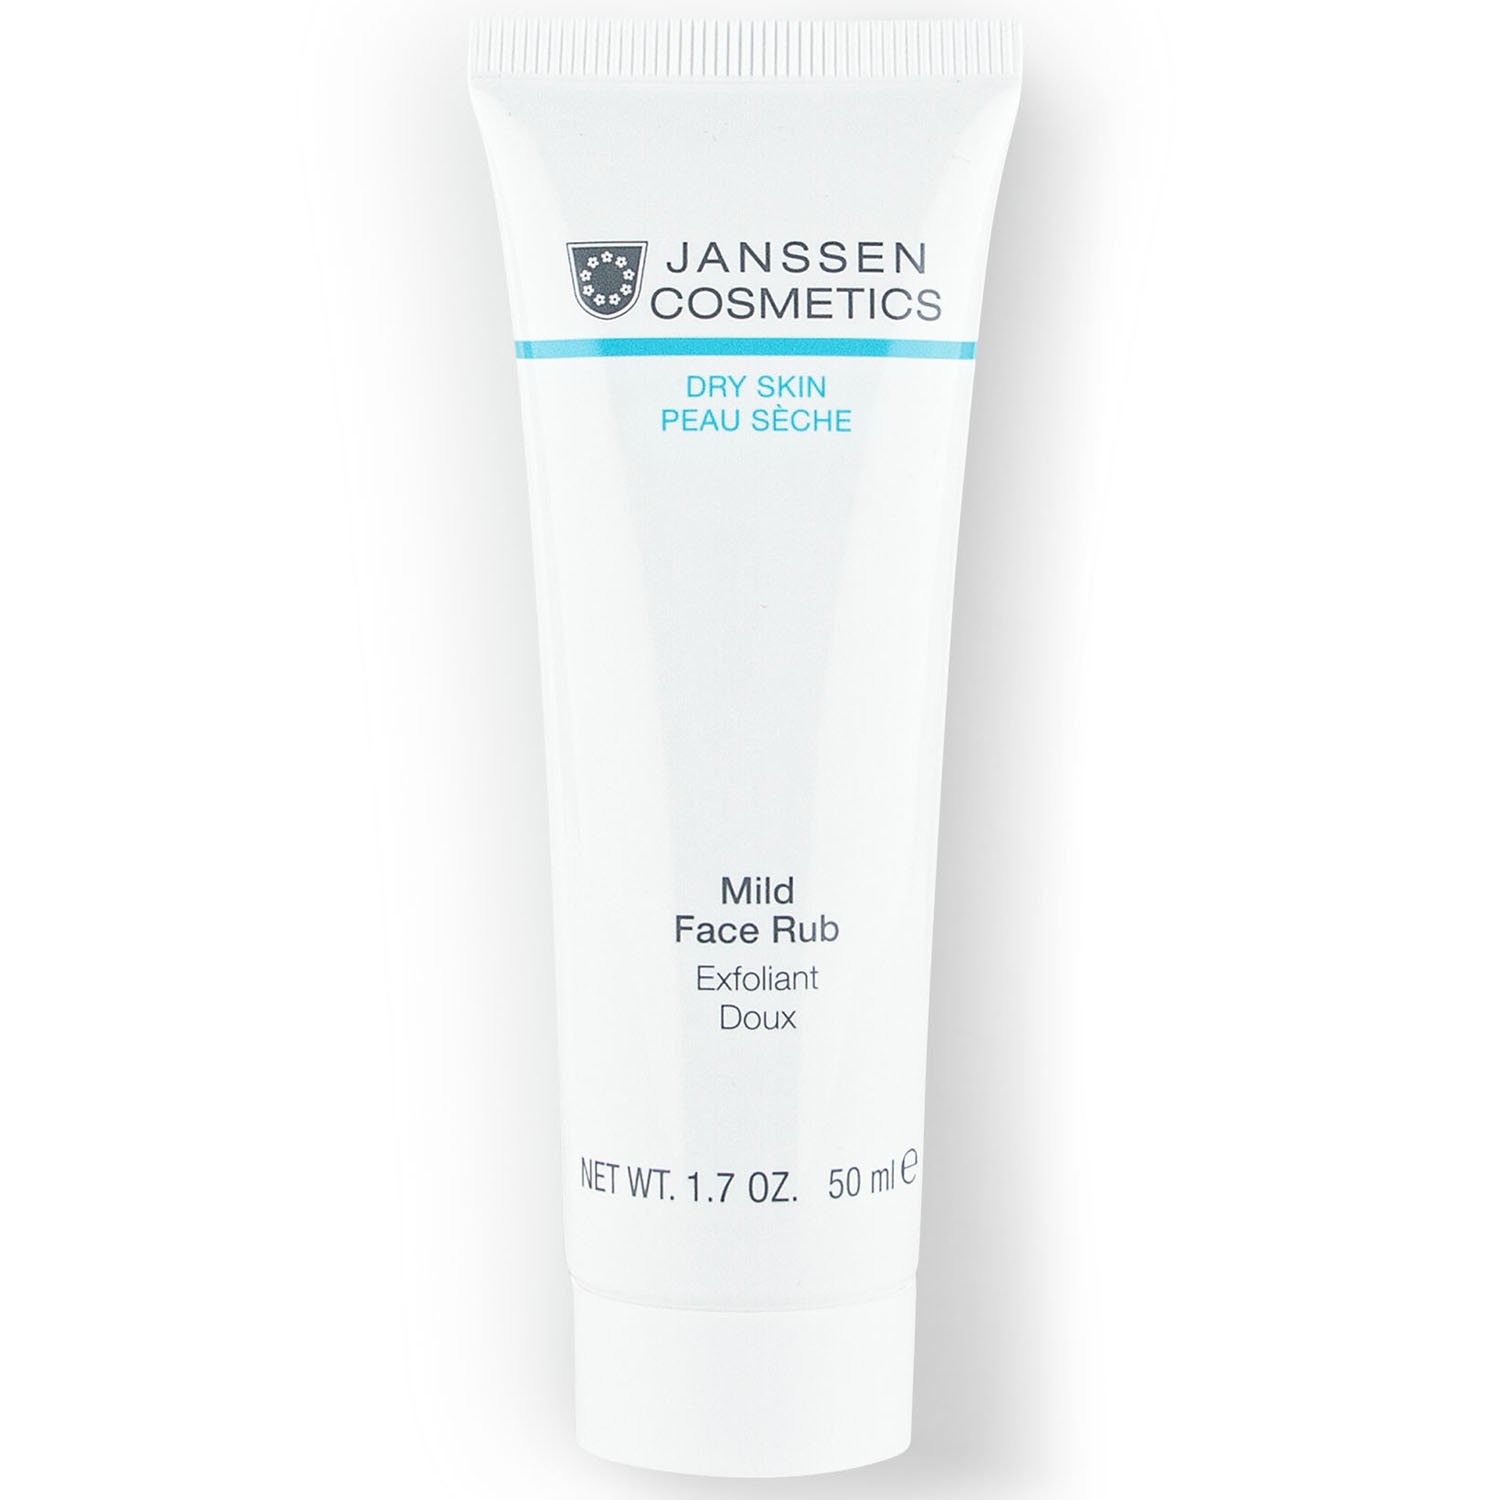 Янсен Косметикс Мягкий скраб с гранулами жожоба Mild Face Rub, 50 мл (Janssen Cosmetics, Dry Skin) фото 0